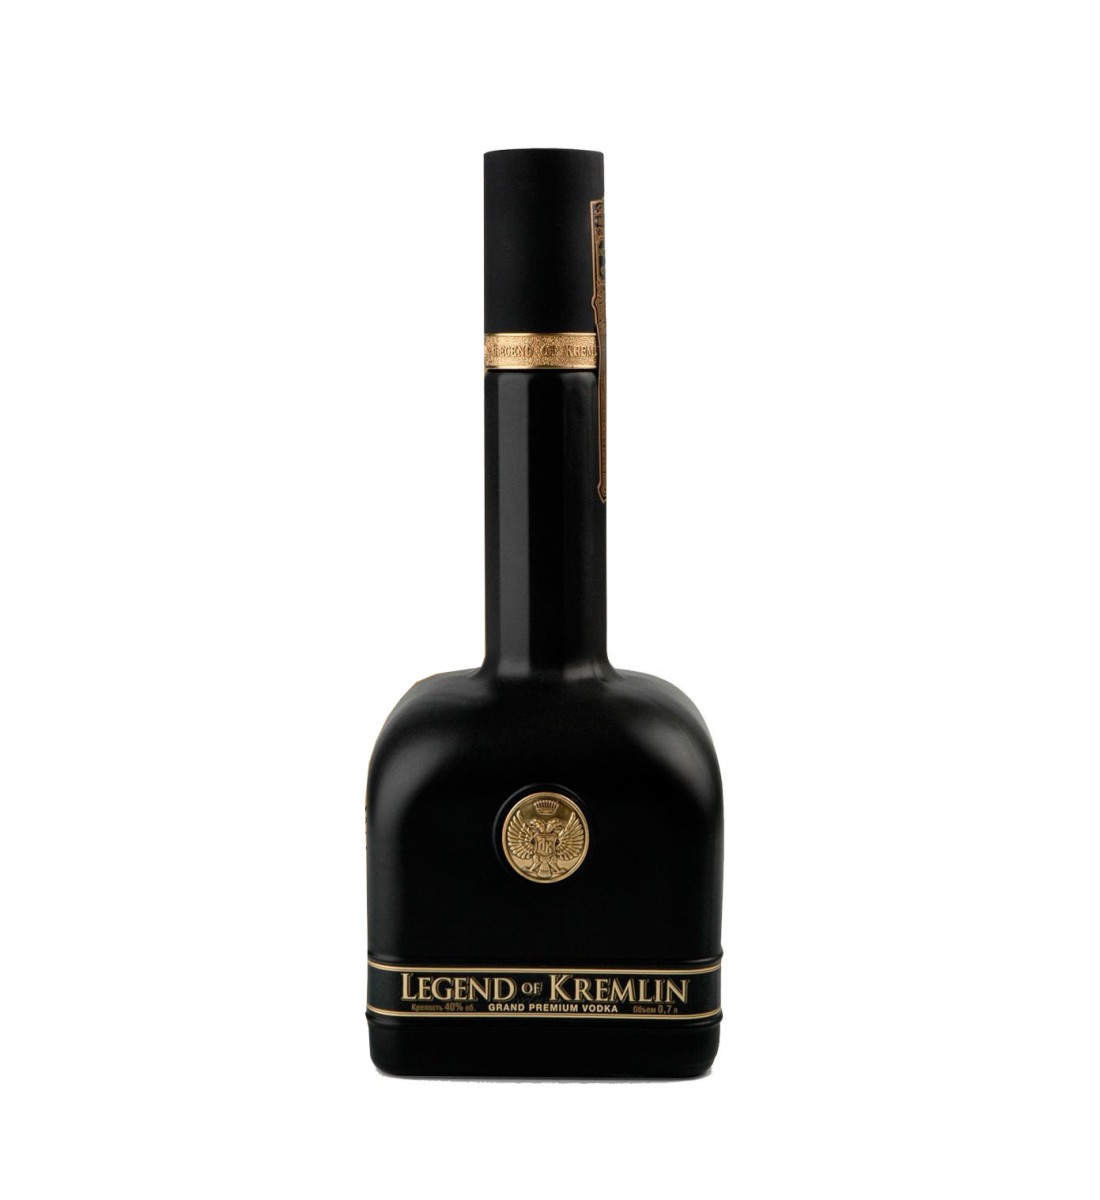 Vodka Legend of Kremlin Grand Premium Black Bottle 0.7L 0.7L